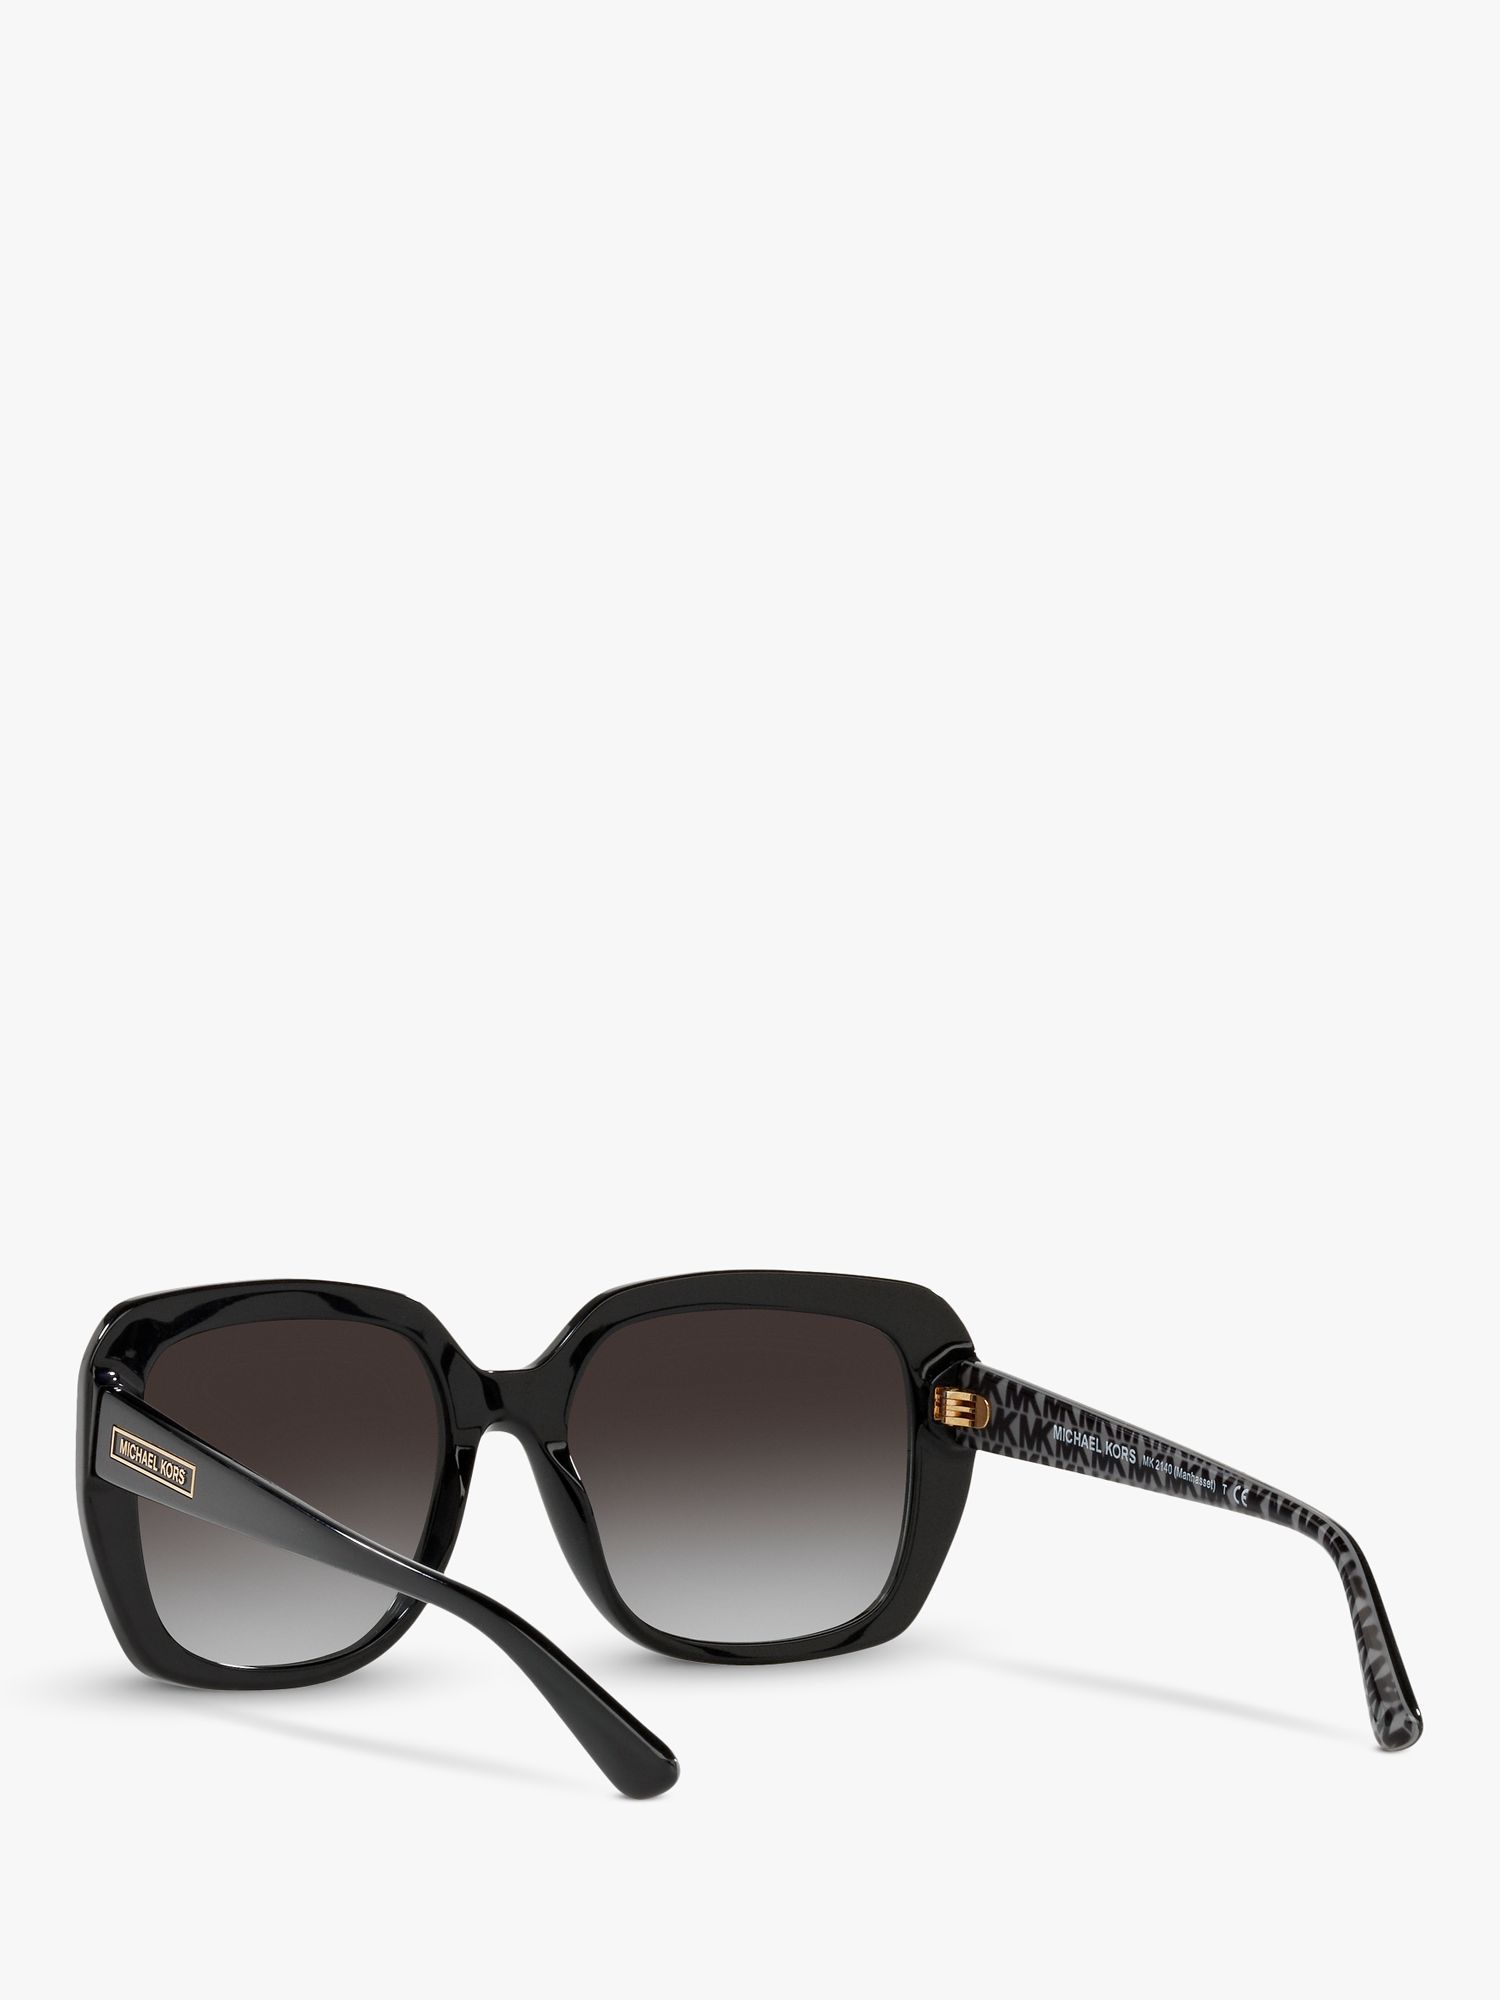 Michael Kors MK2140 Women's Manhasset Square Sunglasses, Black/Grey Gradient